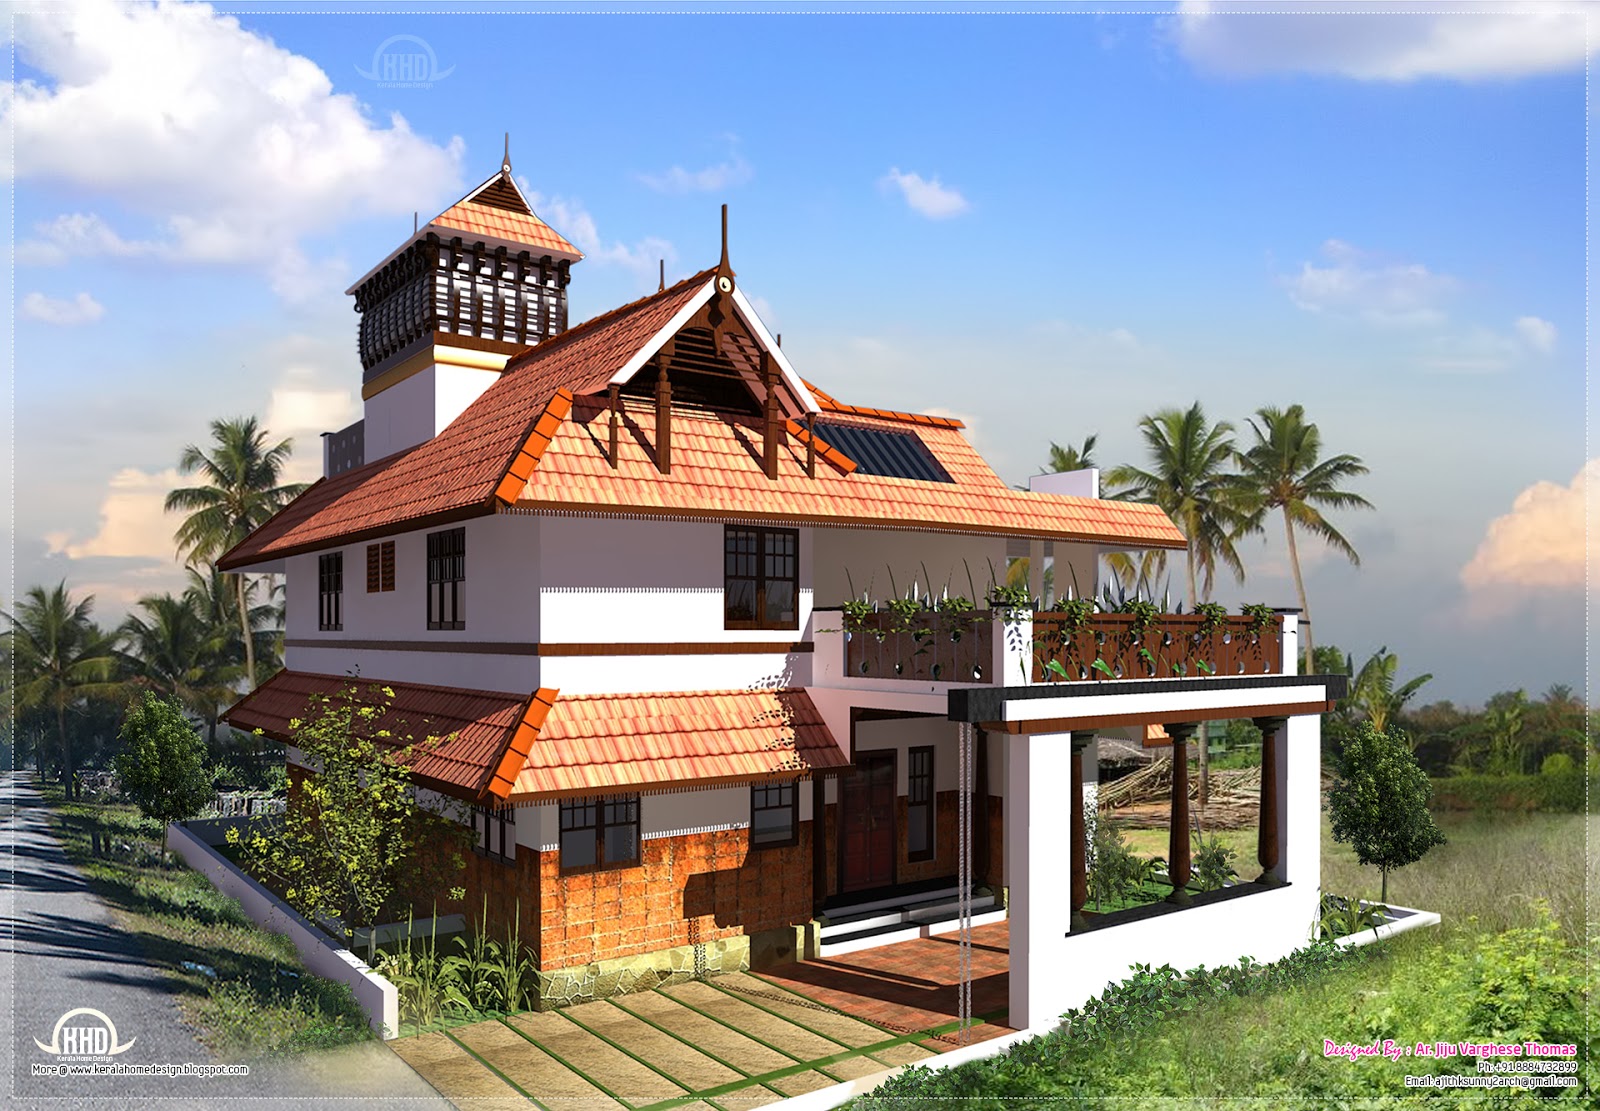  Kerala Traditional House Plans Design Joy Studio Design 